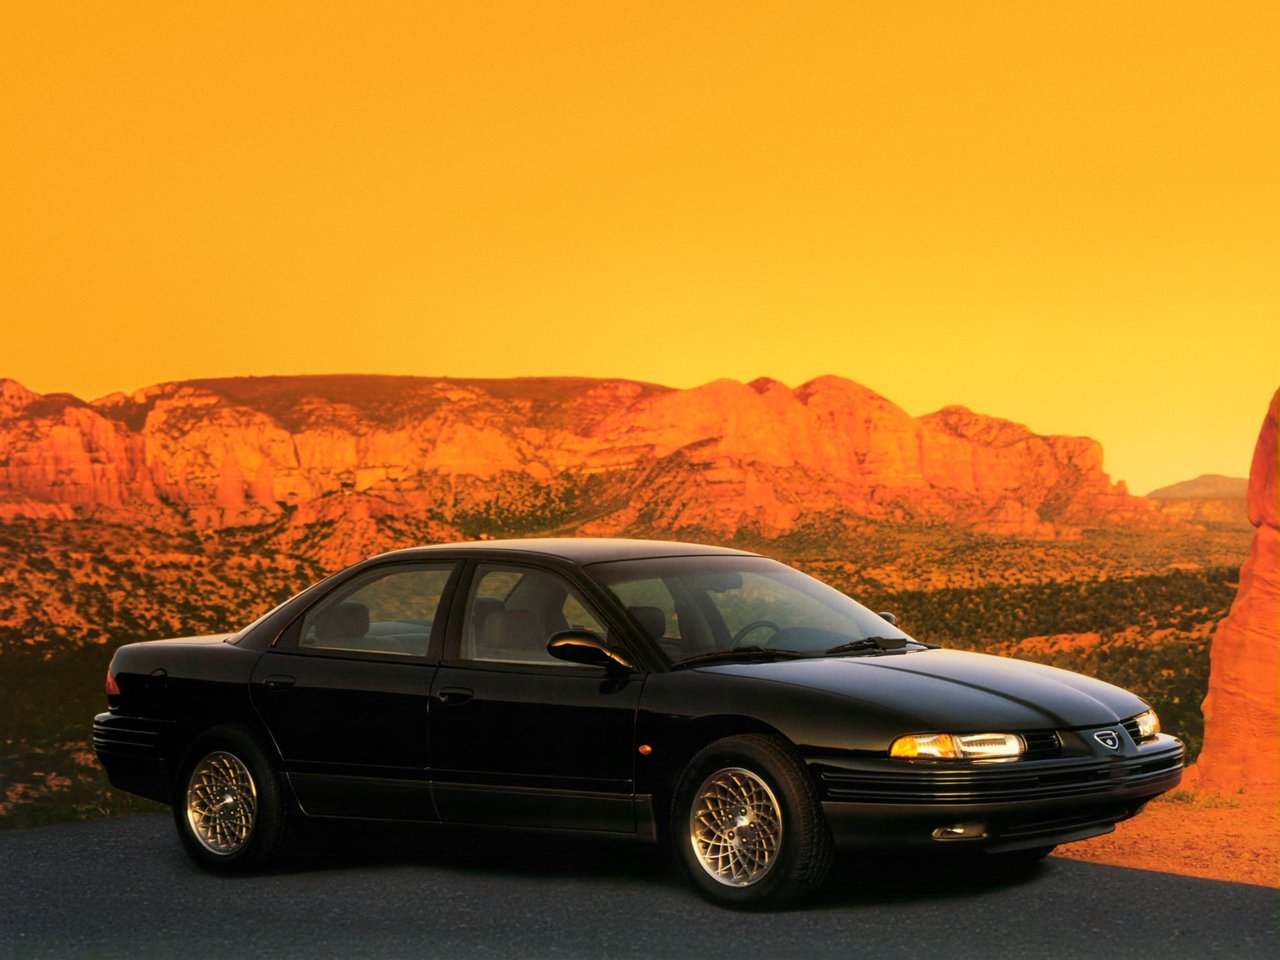 Авто игл. Крайслер игл Вижн. Chrysler Vision 1993-1997. Chrysler Vision 1993. Chrysler Eagle Vision 1993.